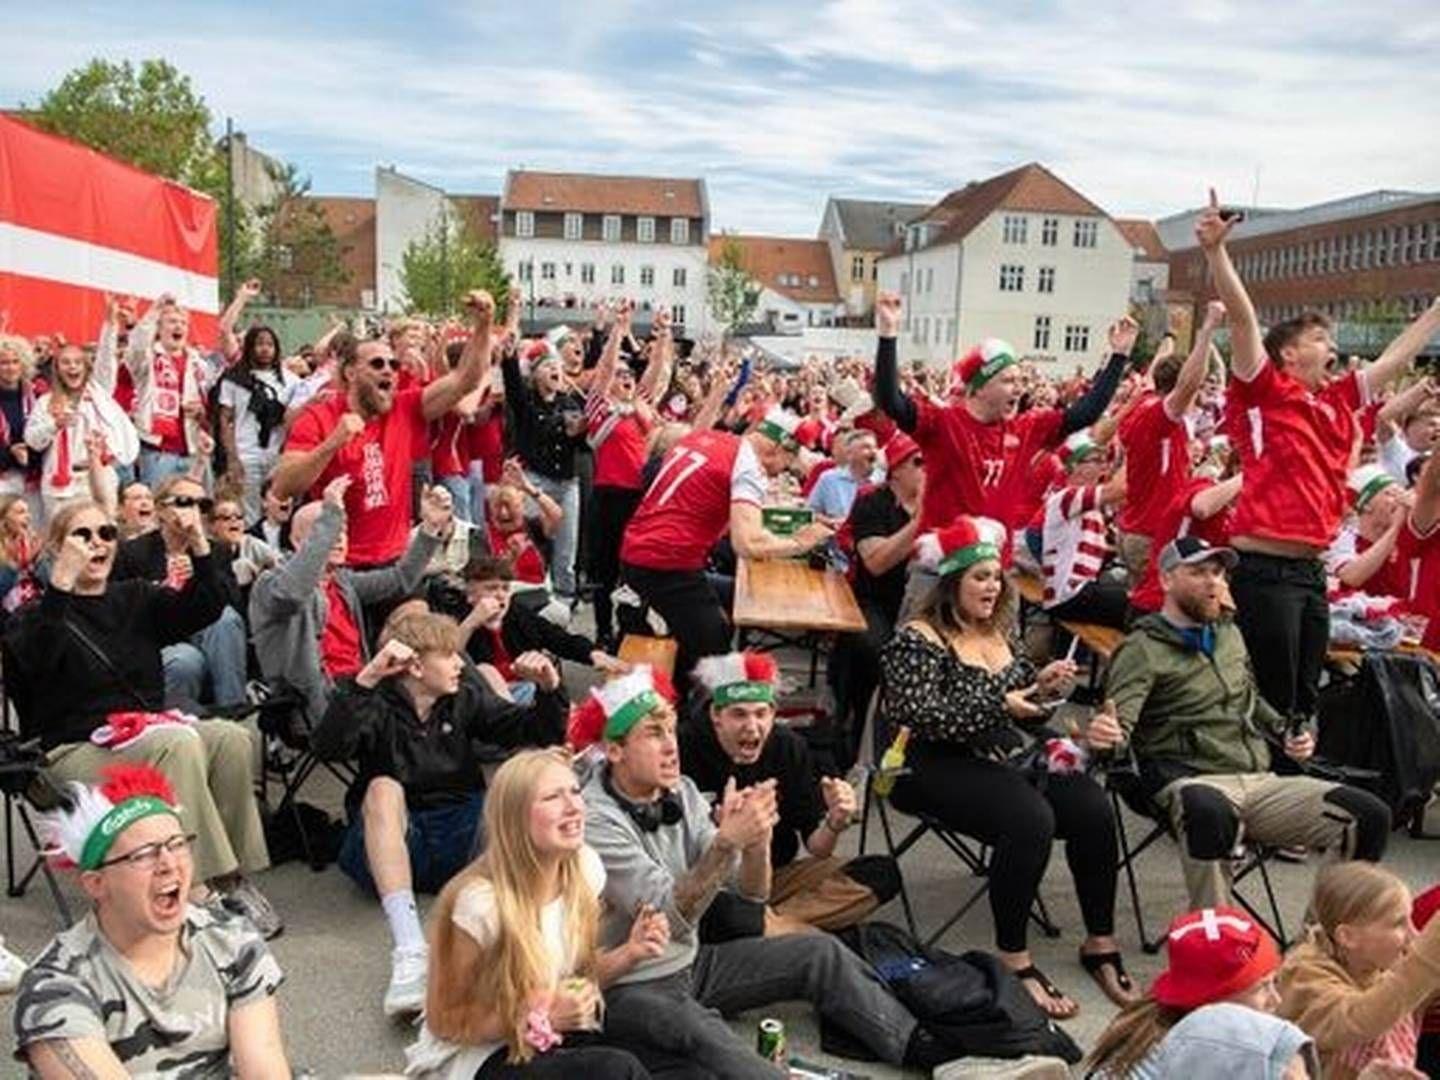 Danmark spiller lørdag ottendedelsfinale ved EM i fodbold mod Tyskland. | Foto: Søren Gylling/Jyskfynskemedier/Ritzau Scanpix/TV 2